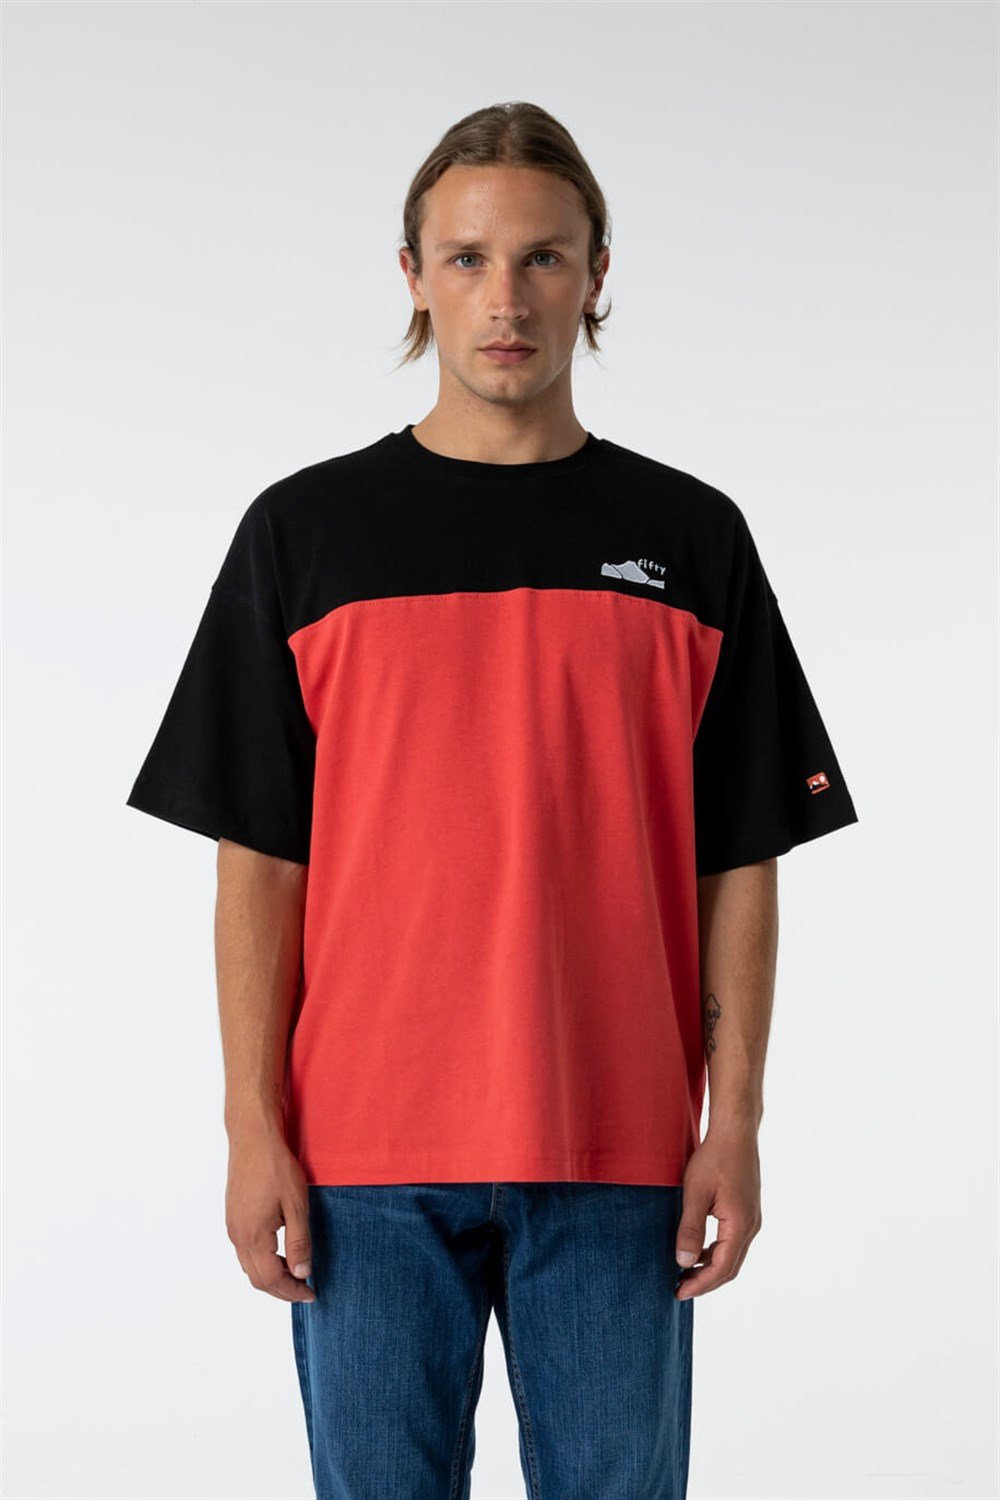 Men's Black-Red Contrast Color T-shirt